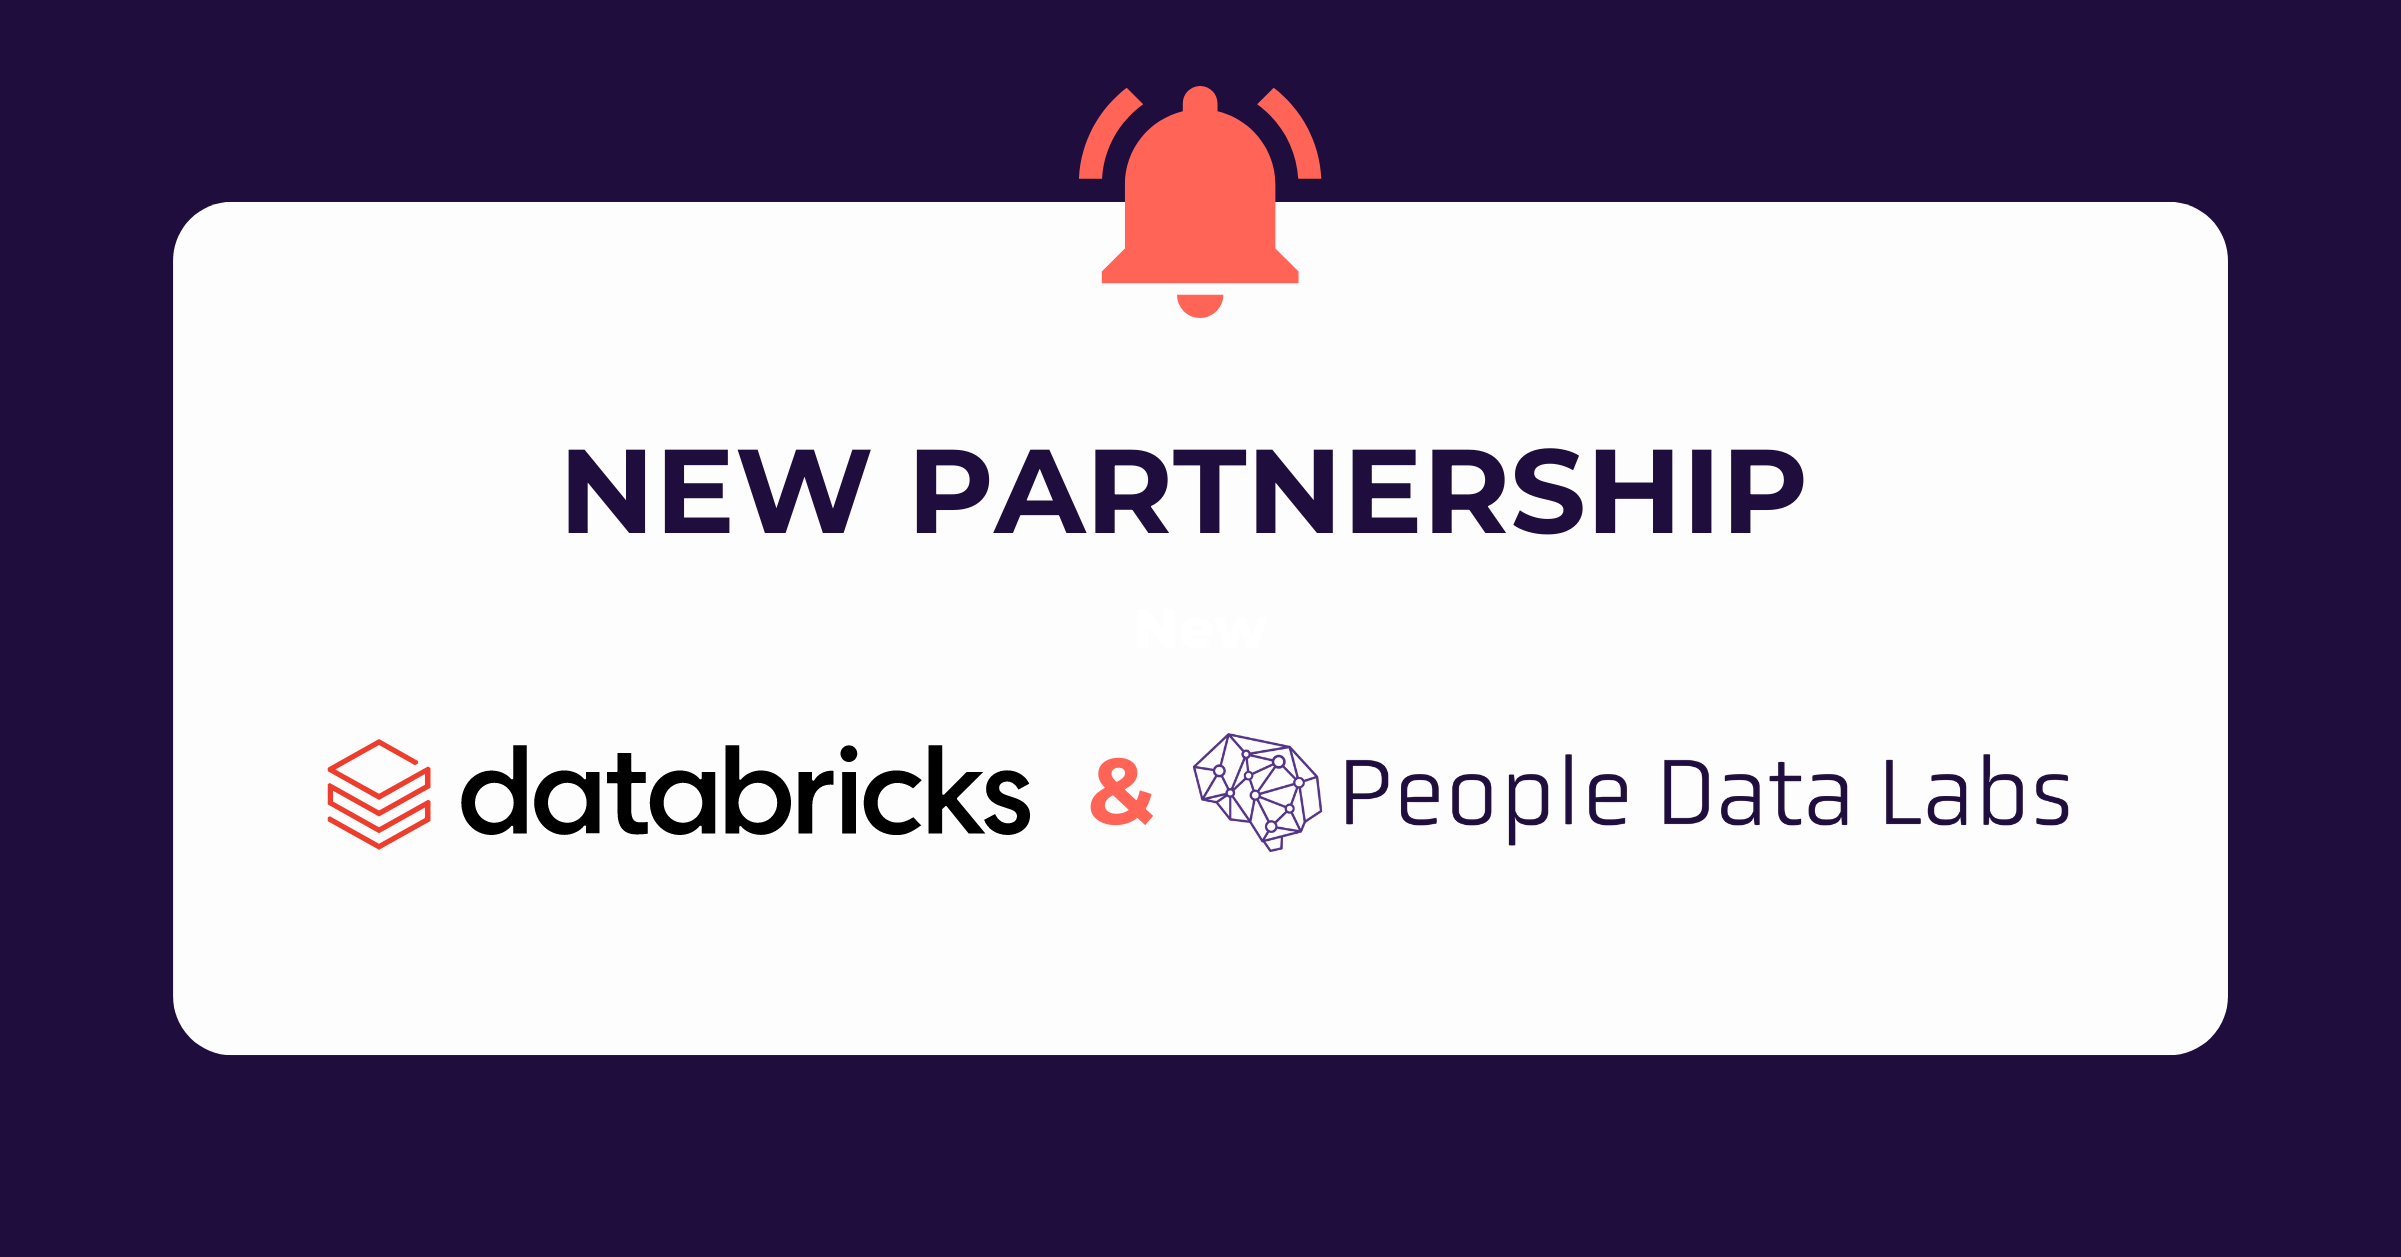 Databricks and People Data Labs partnership